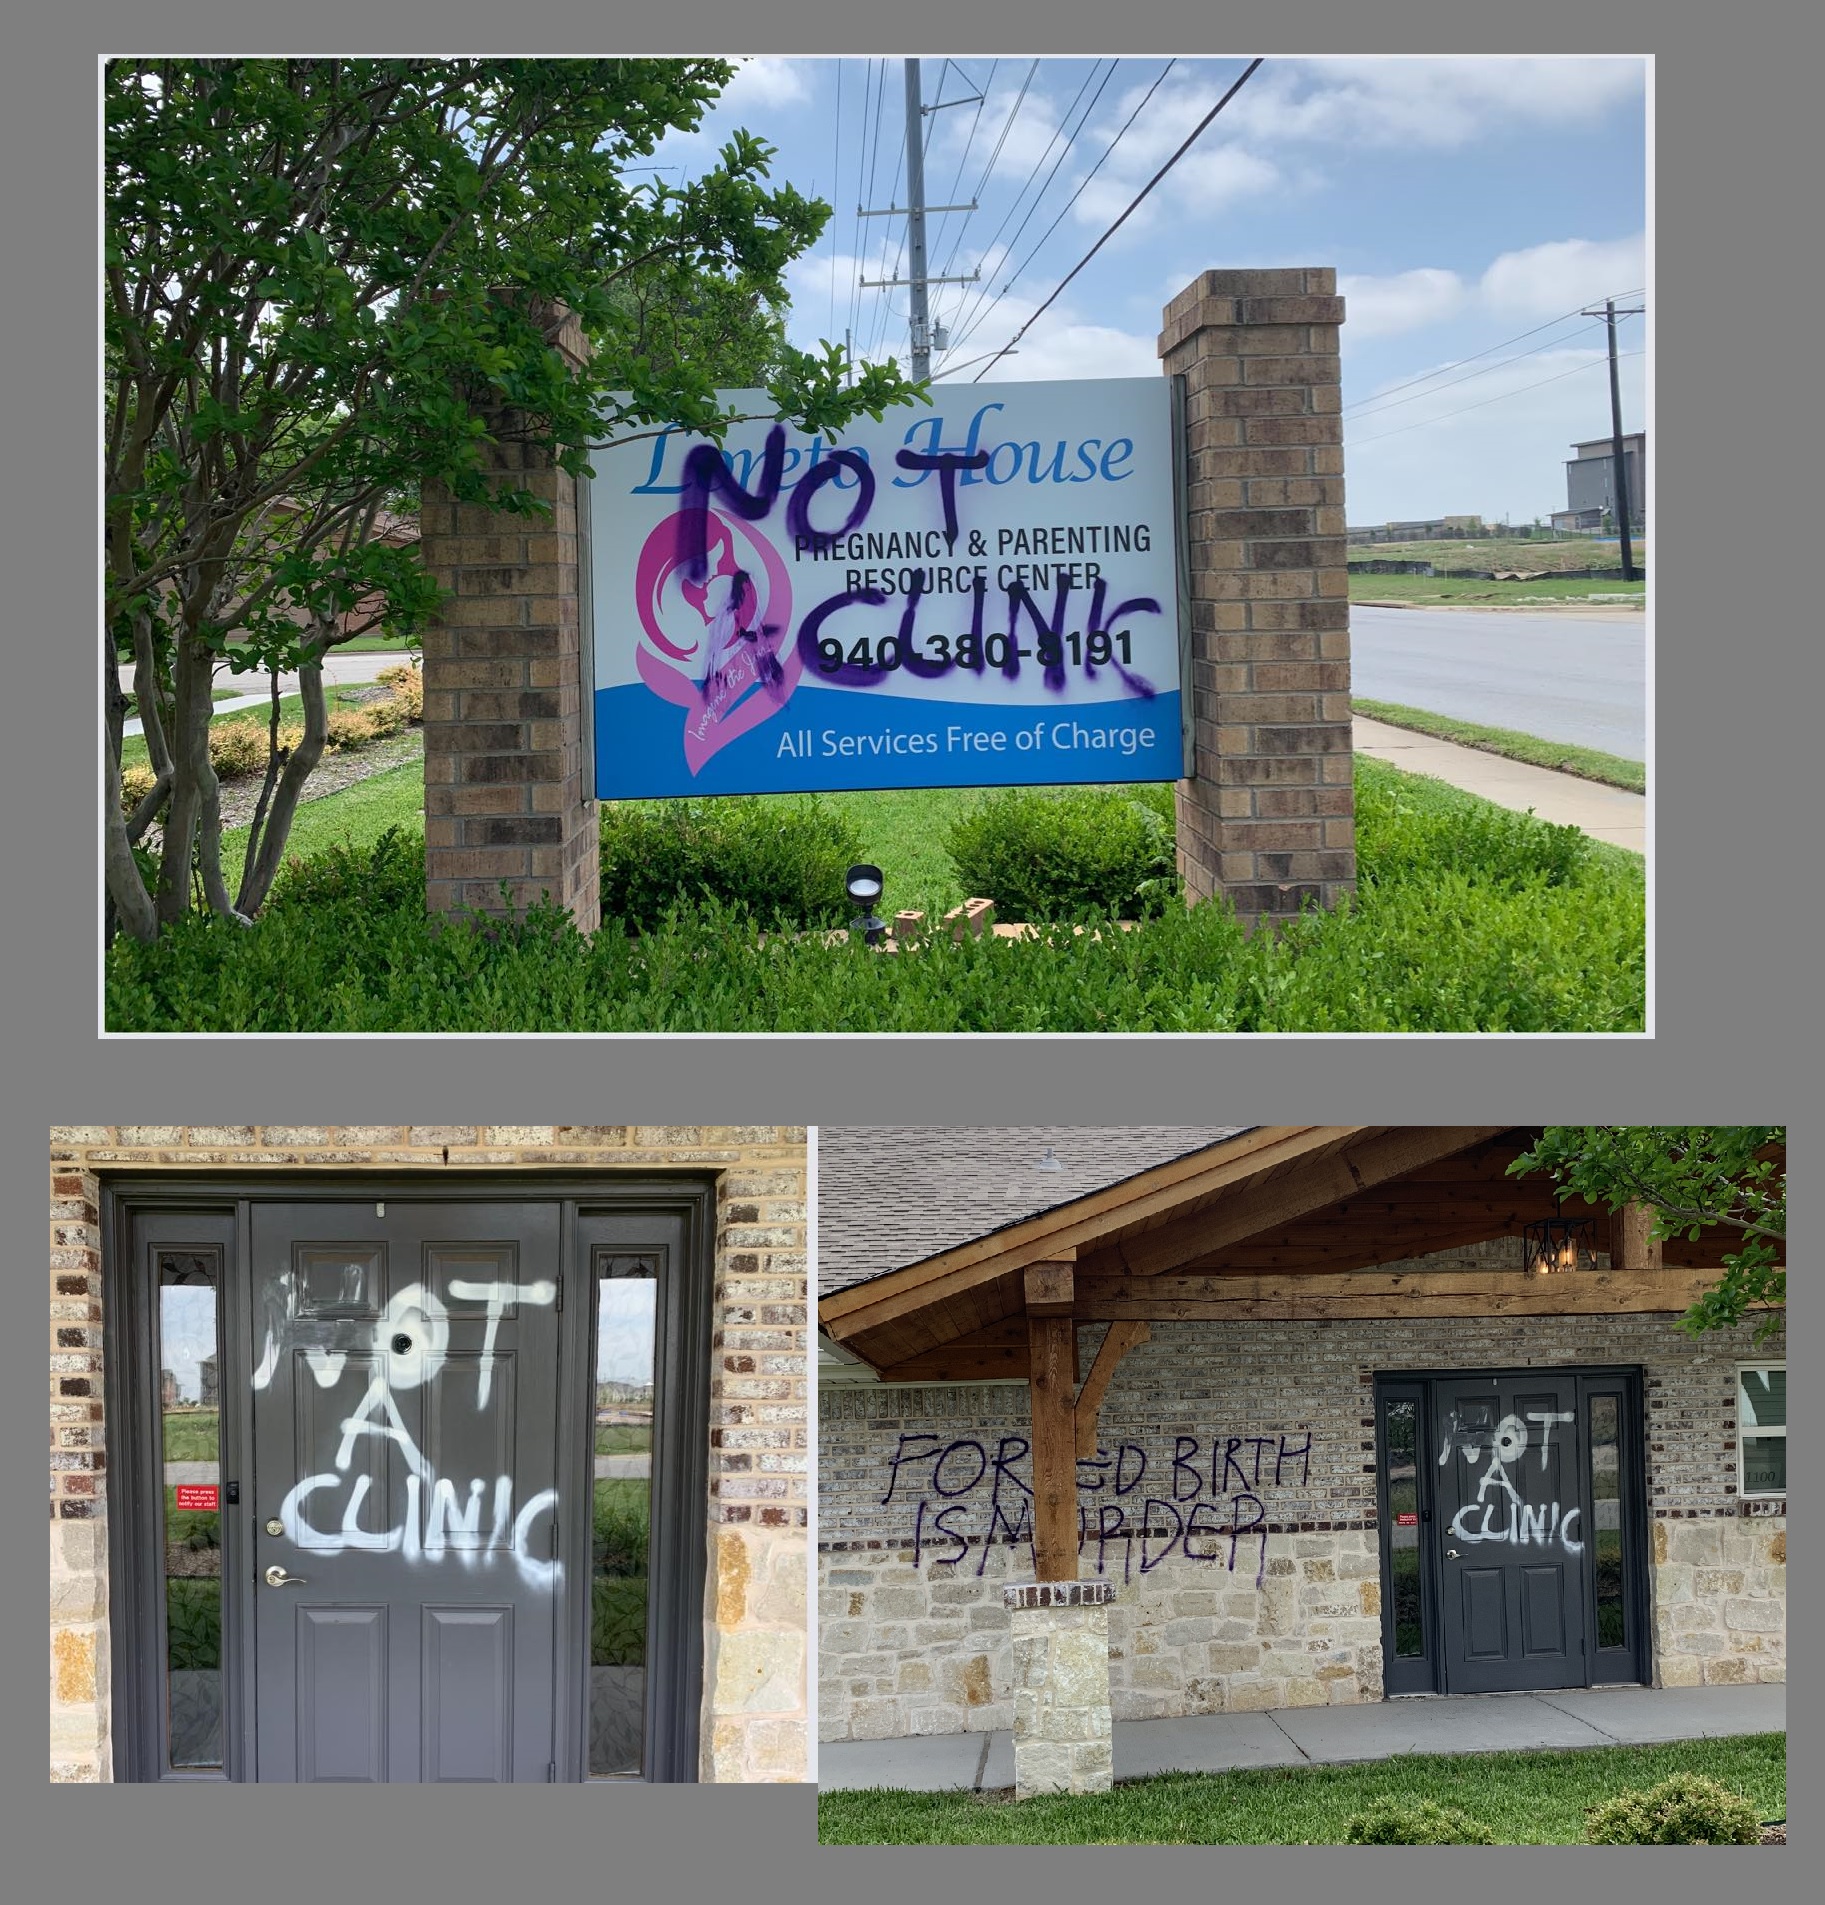 Image: Loreto House pro-life Pregnancy Center vandalized in Denton Tx (Image credit: Carole Novielli) 